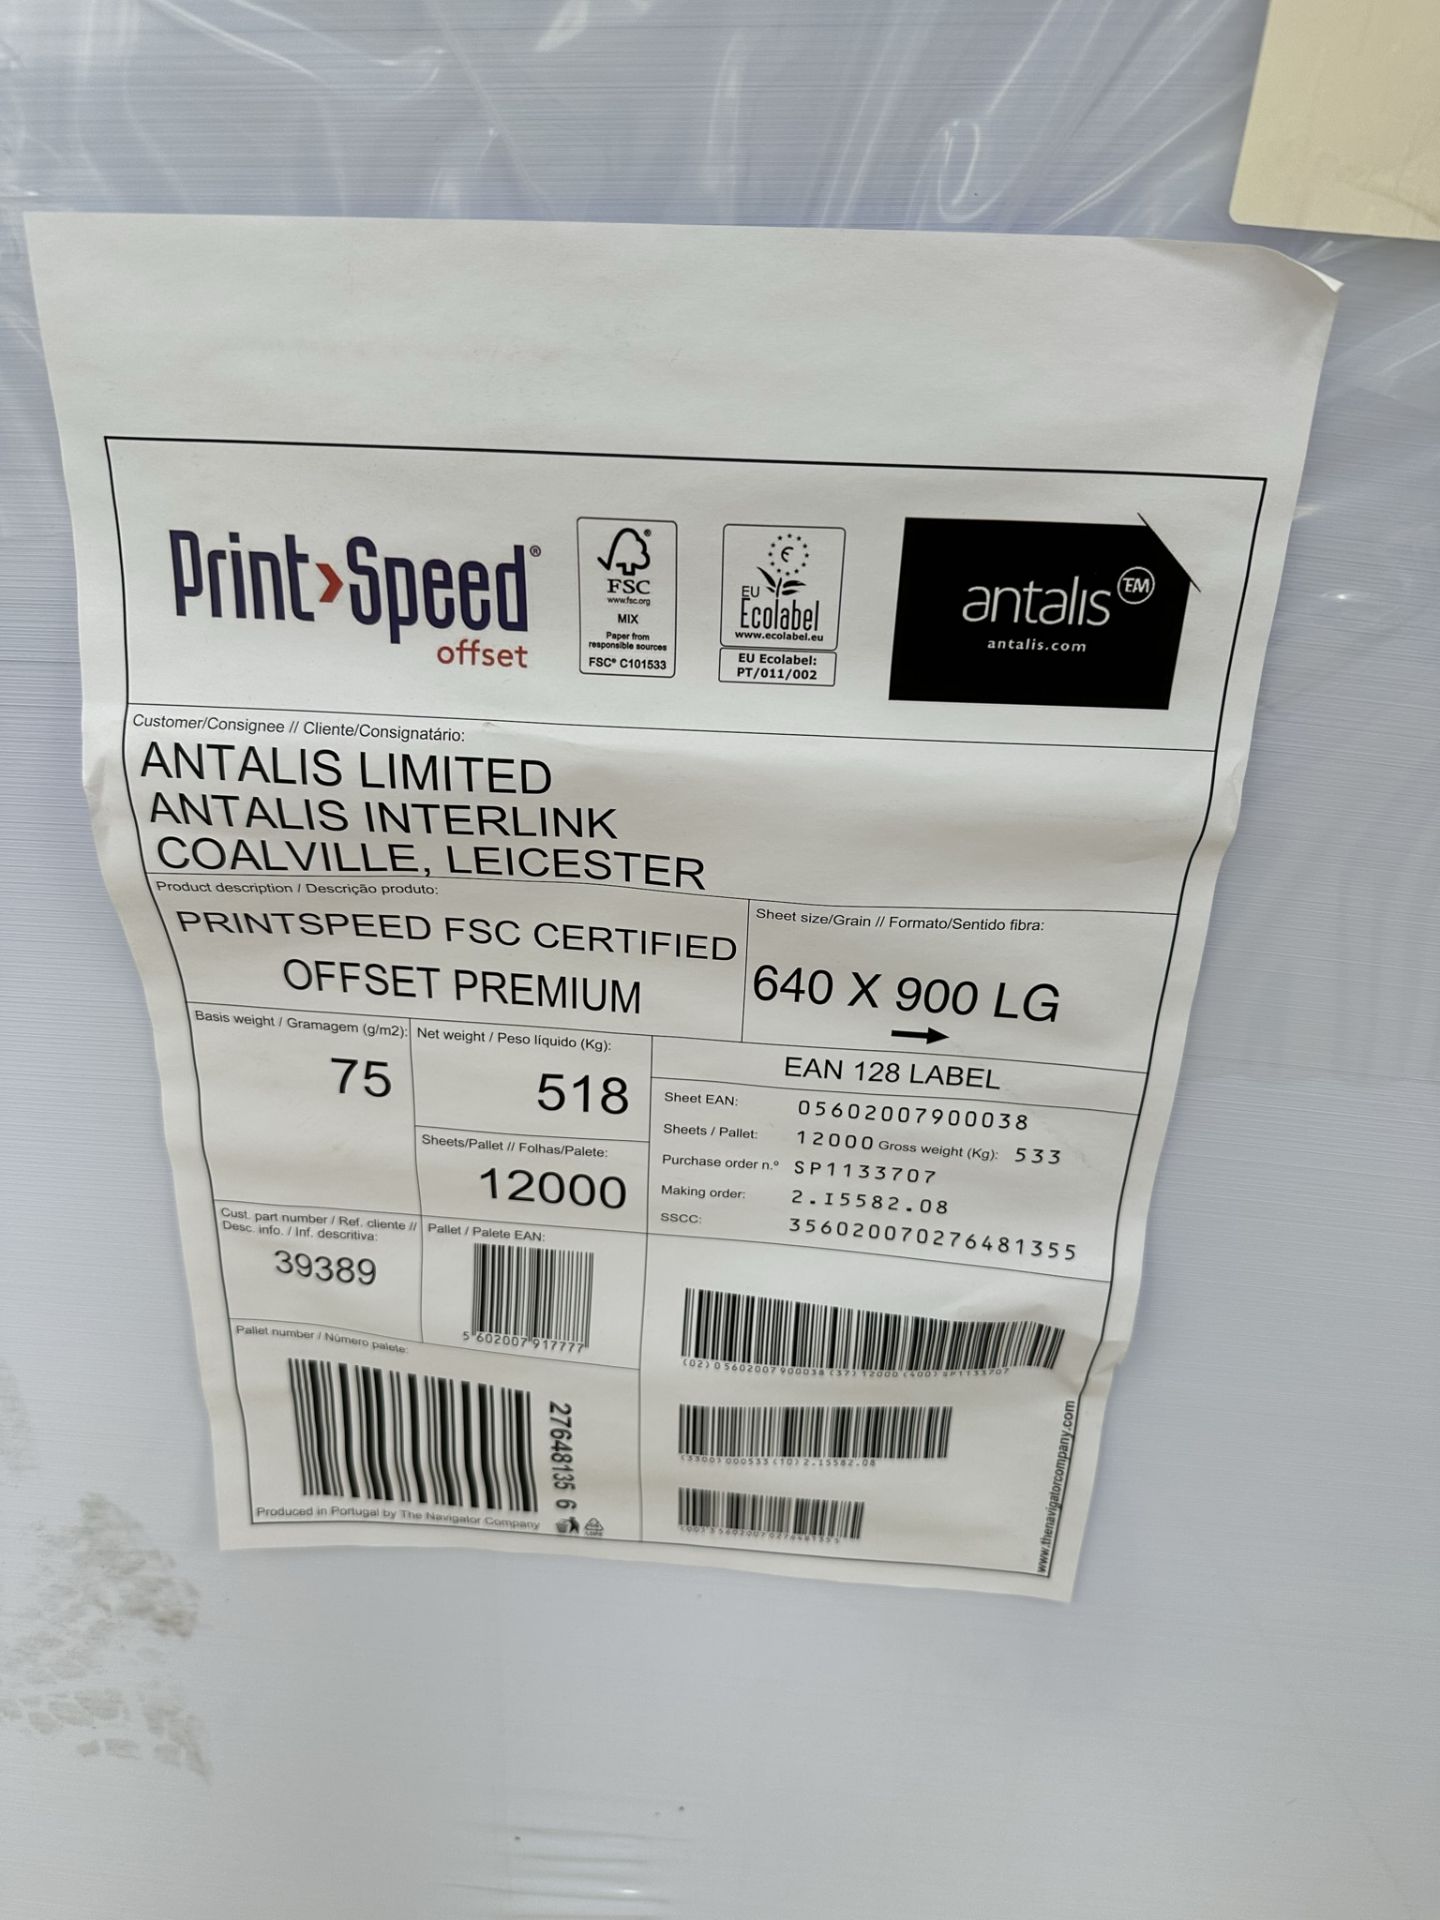 12,000 Sheets of Printspeed FSC Certified Offset Premium | 75gm2 | 640 x 900 LG - Image 2 of 2